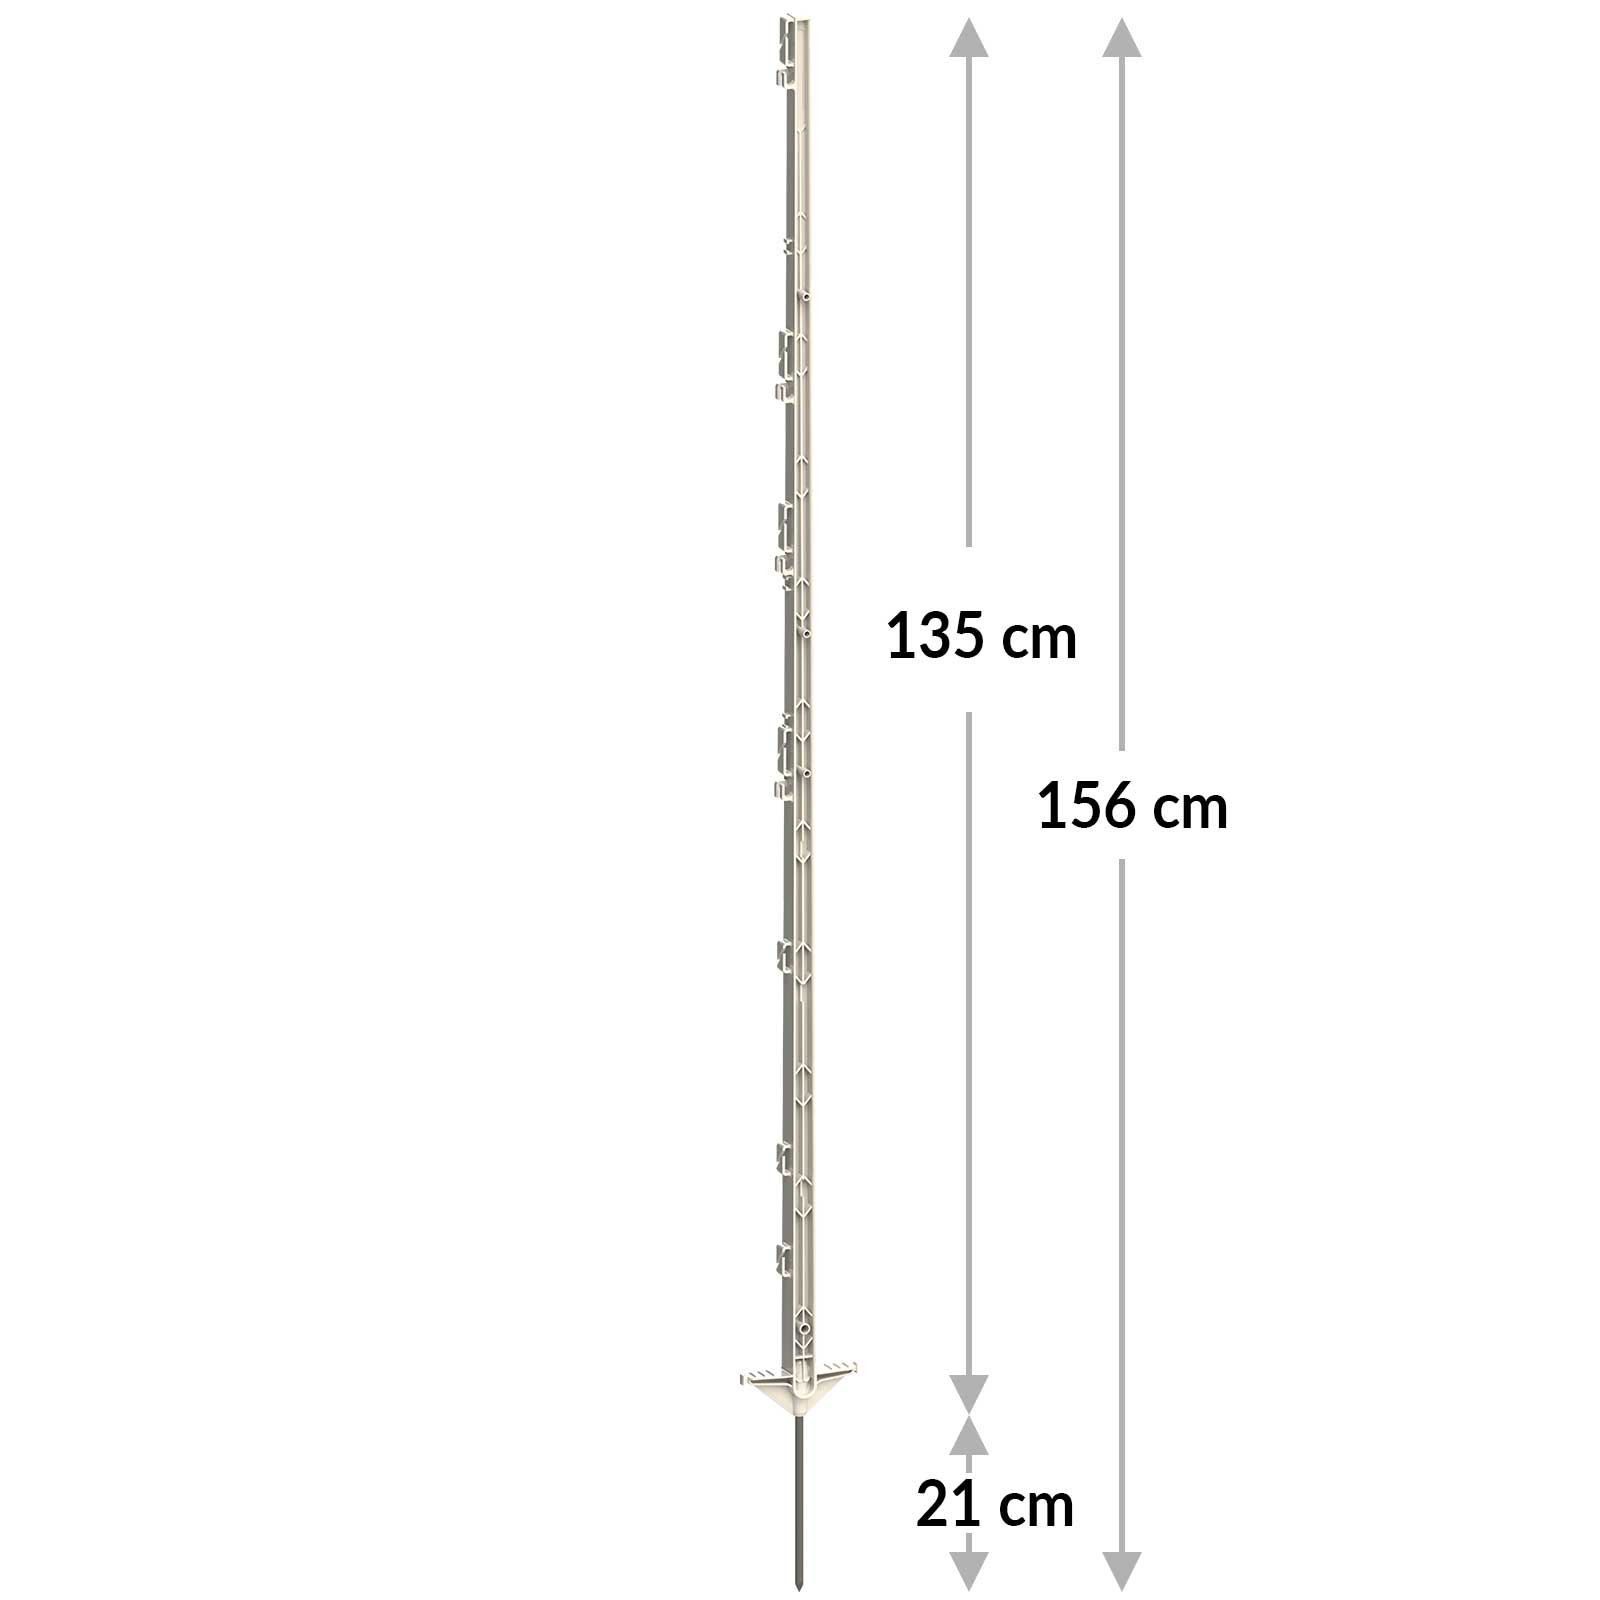 5x AKO Staketstolpe CLASSIC 156 cm, dubbla slitbanor, vit